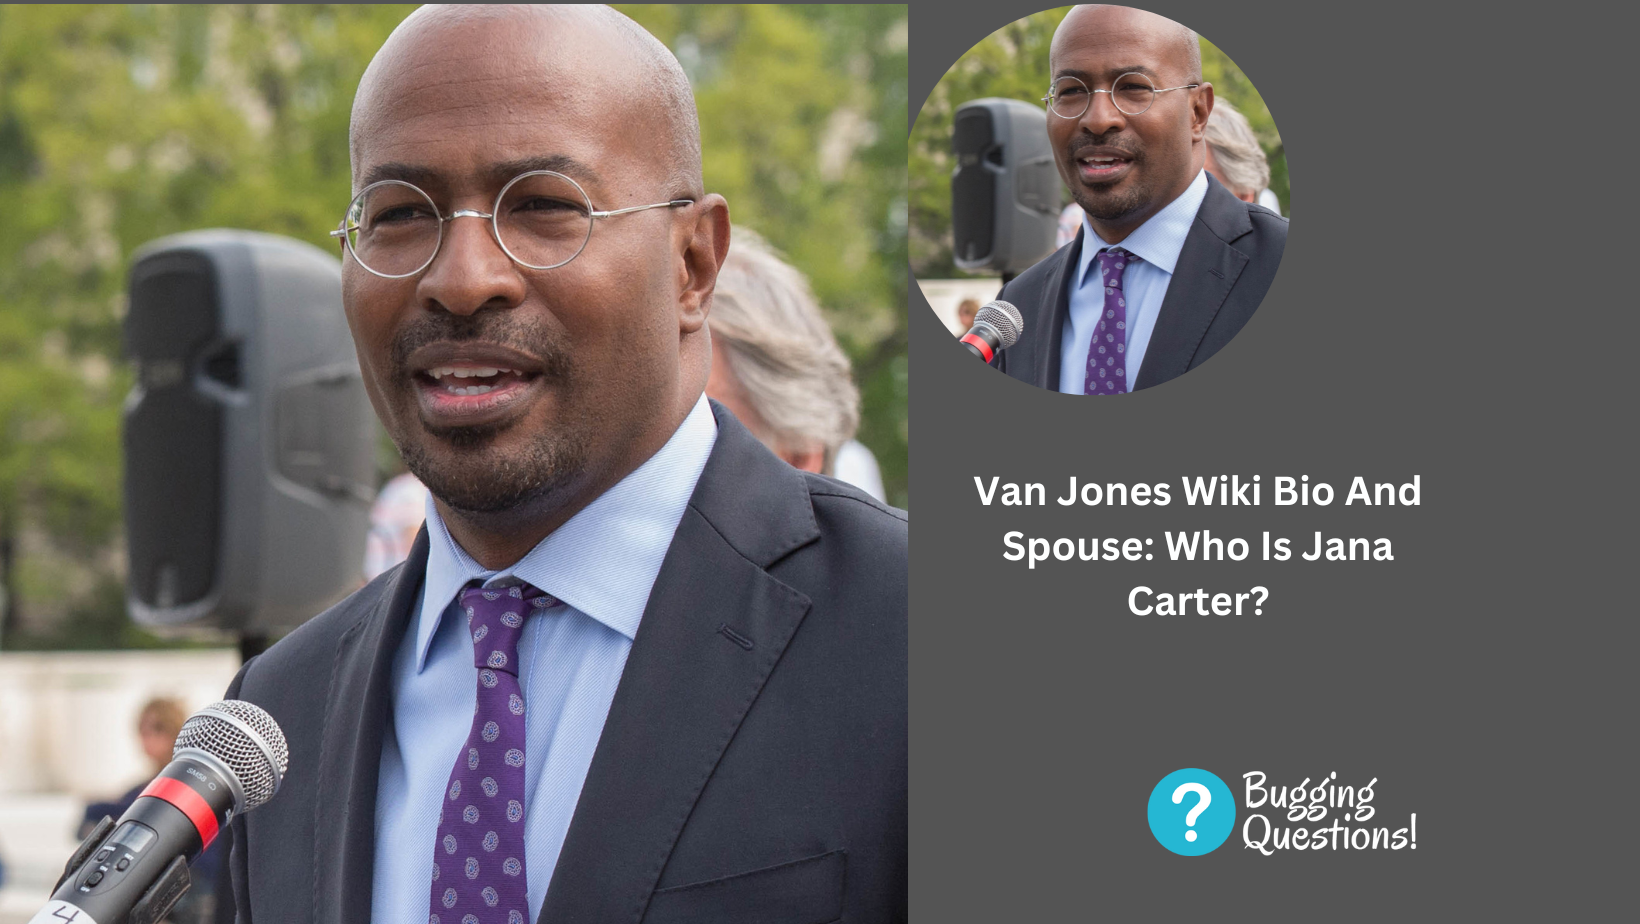 Van Jones Wiki Bio And Spouse: Who Is Jana Carter?